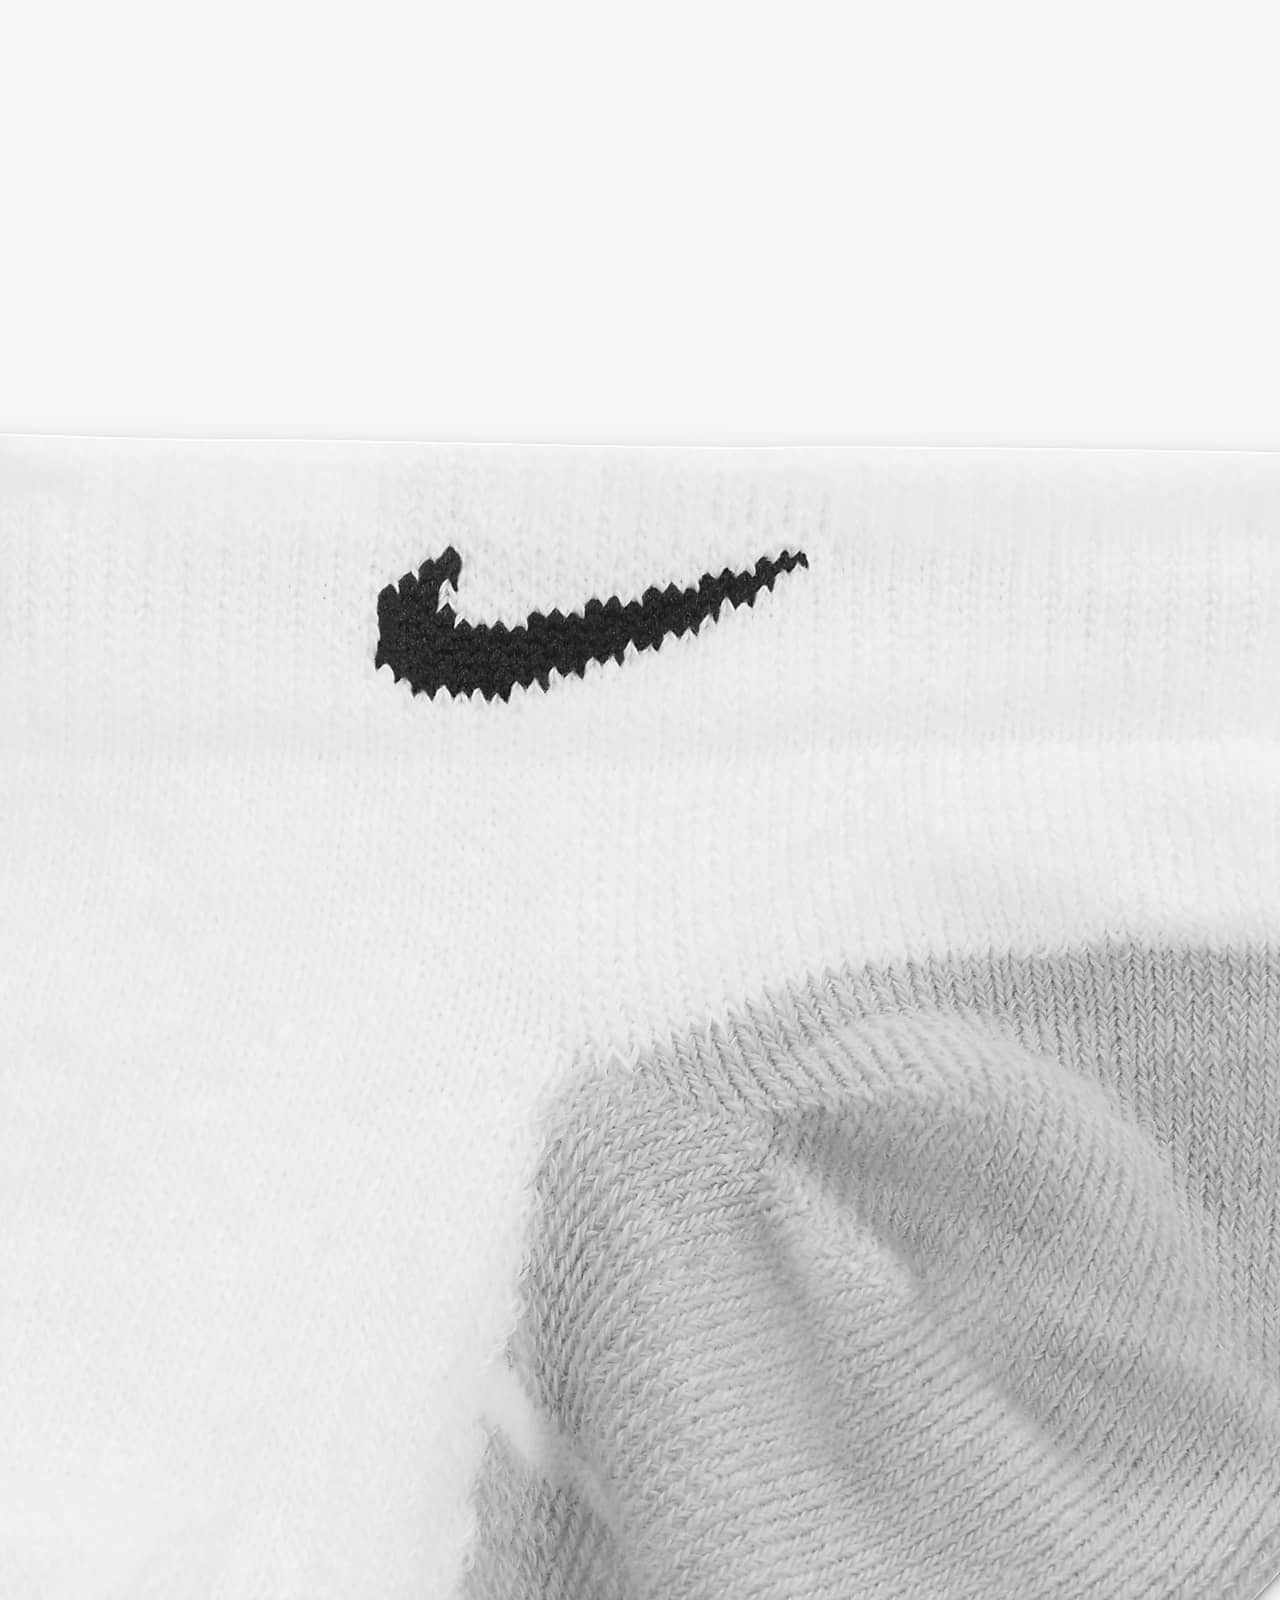 Nike Everyday Max Cushioned Training No-Show Socks (3 Pairs).